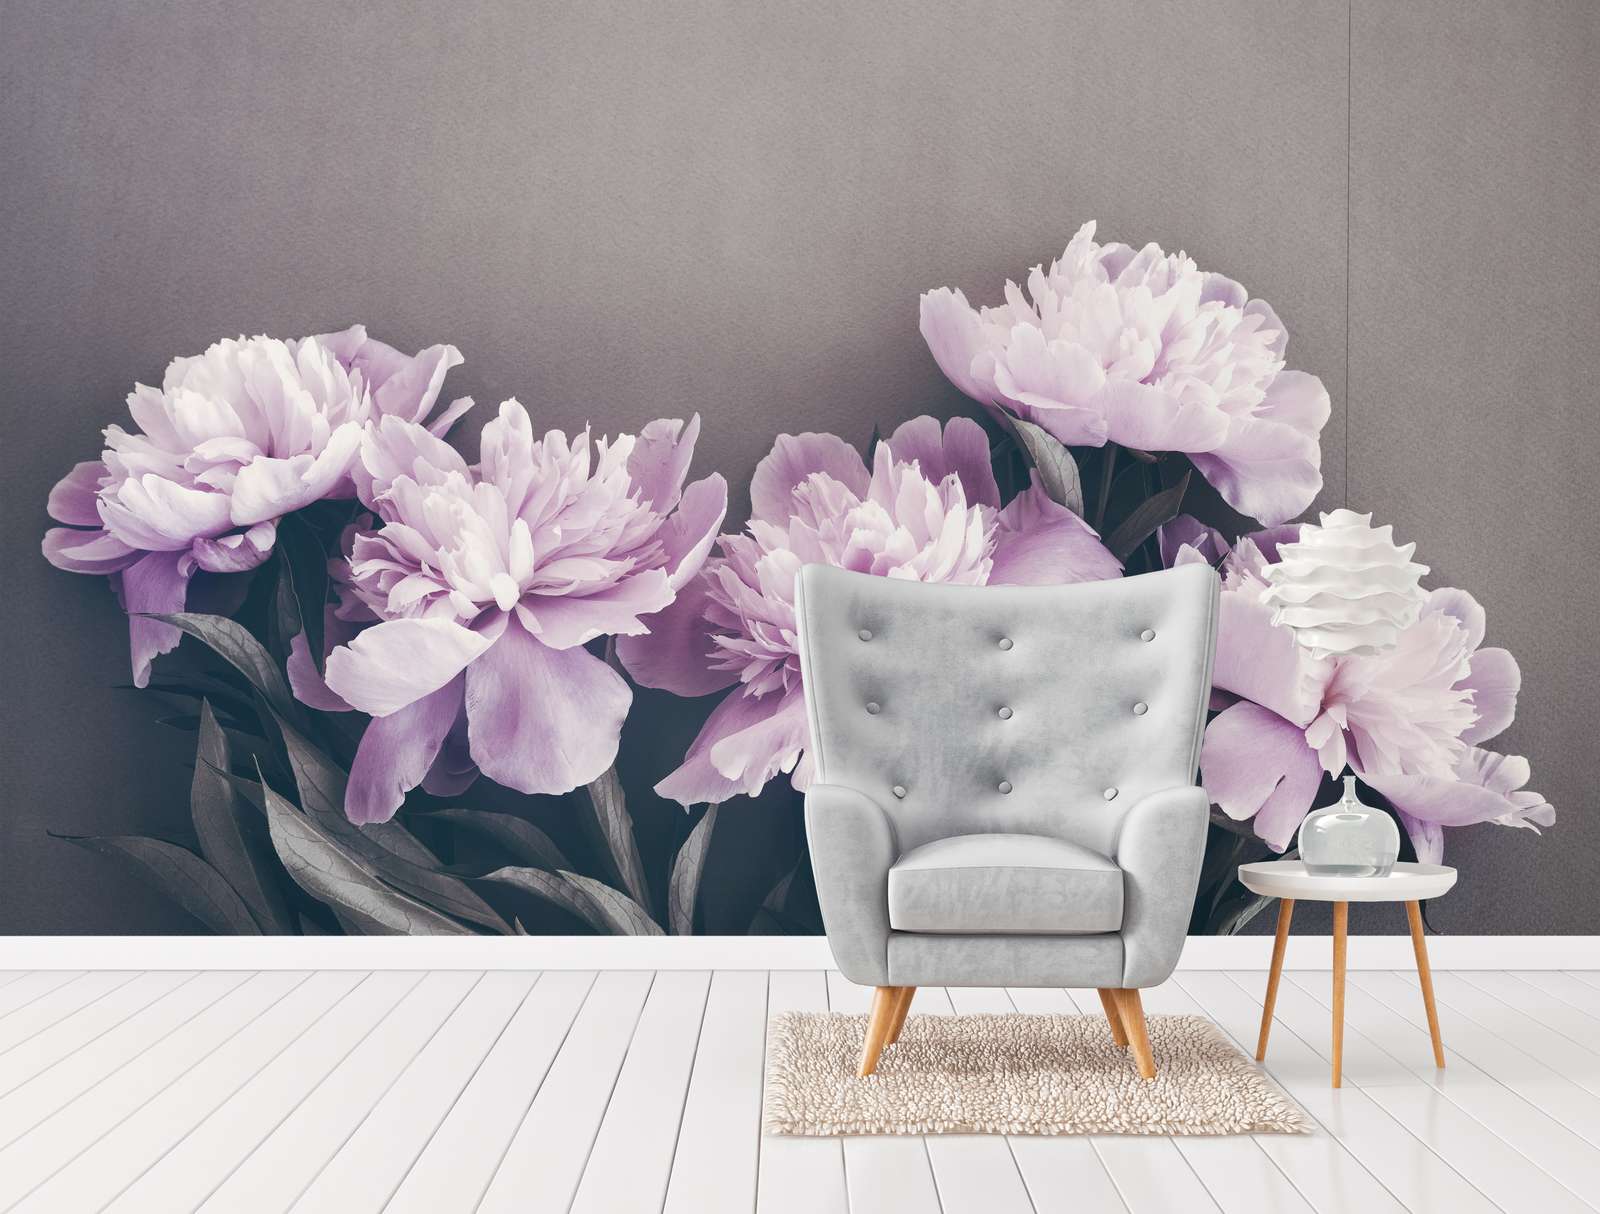             Peonies floral pattern wallpaper - Pink, Grey
        